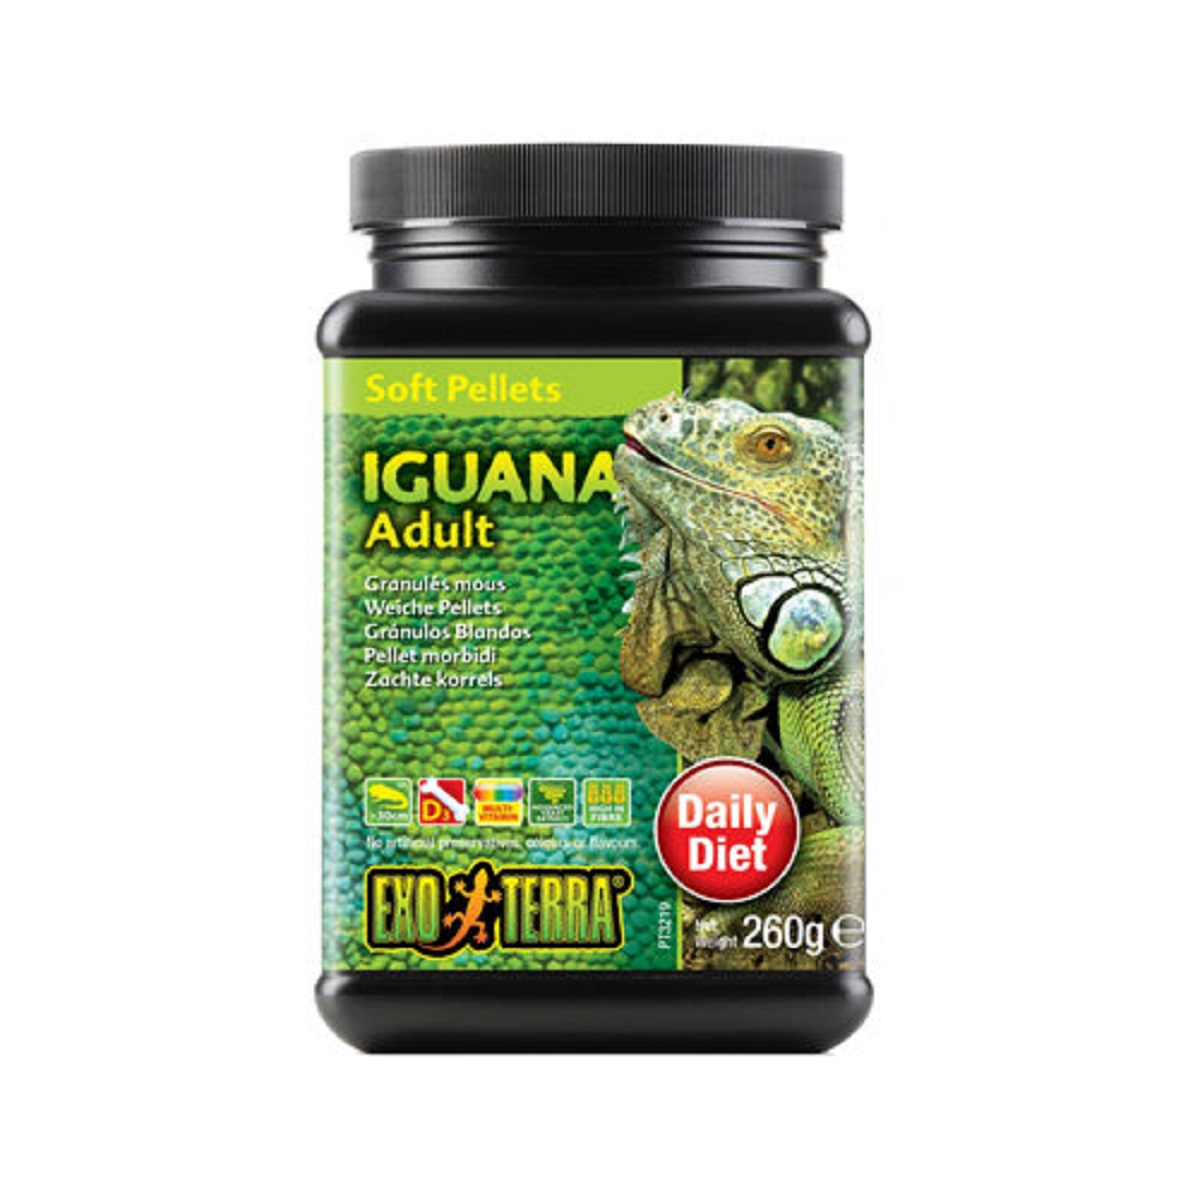 Exo Terra granulado para iguanas adultas